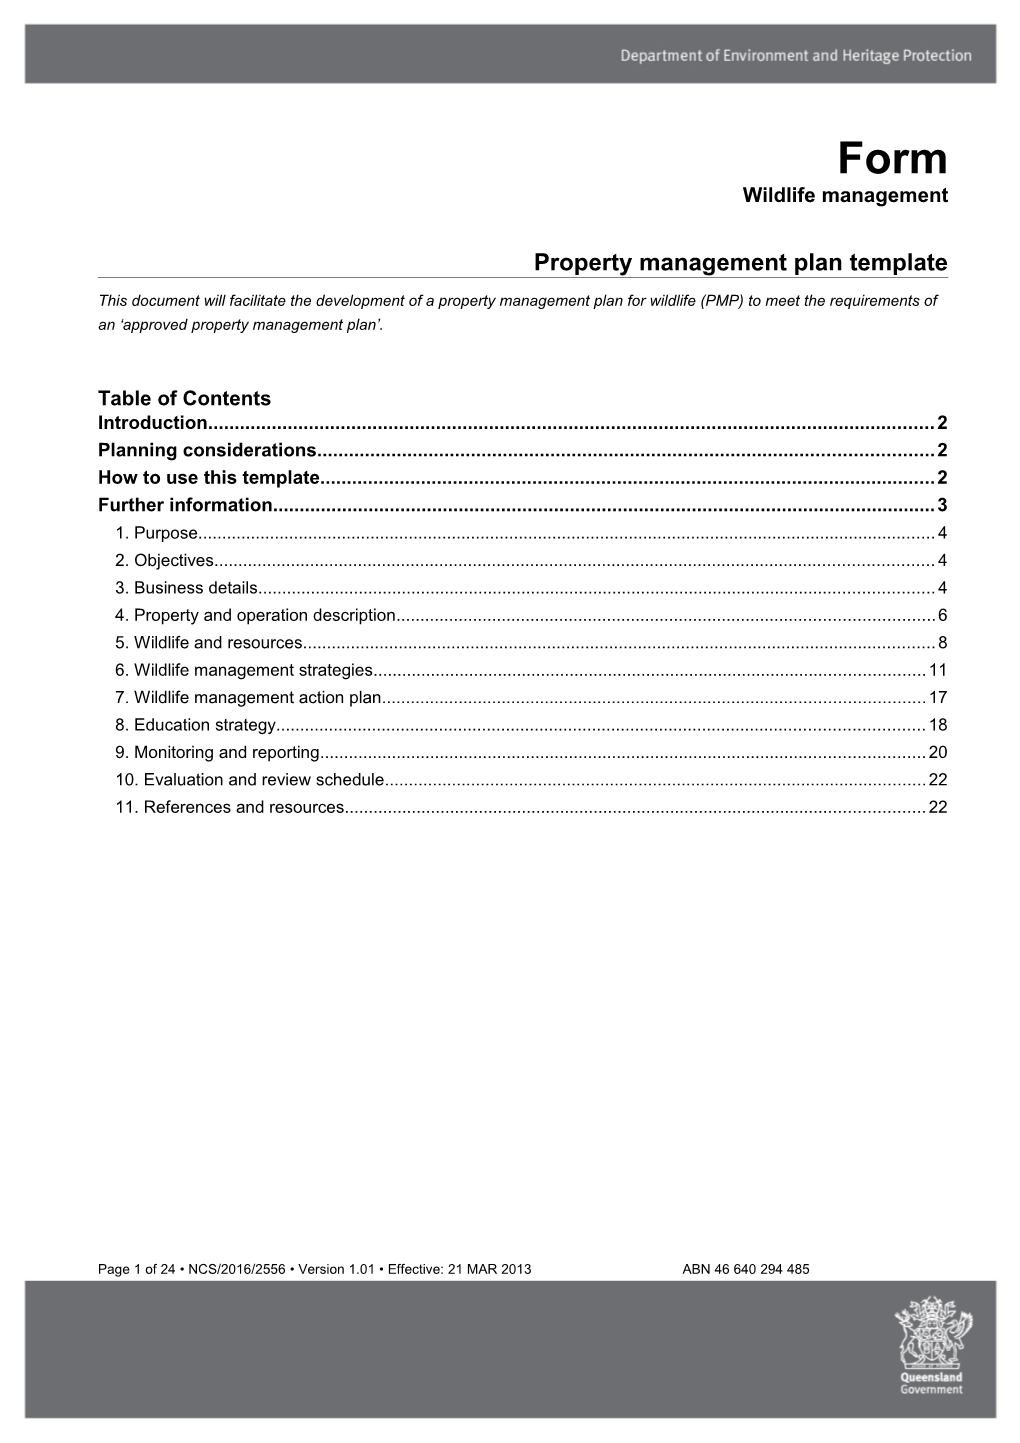 Form Property Management Plan Template